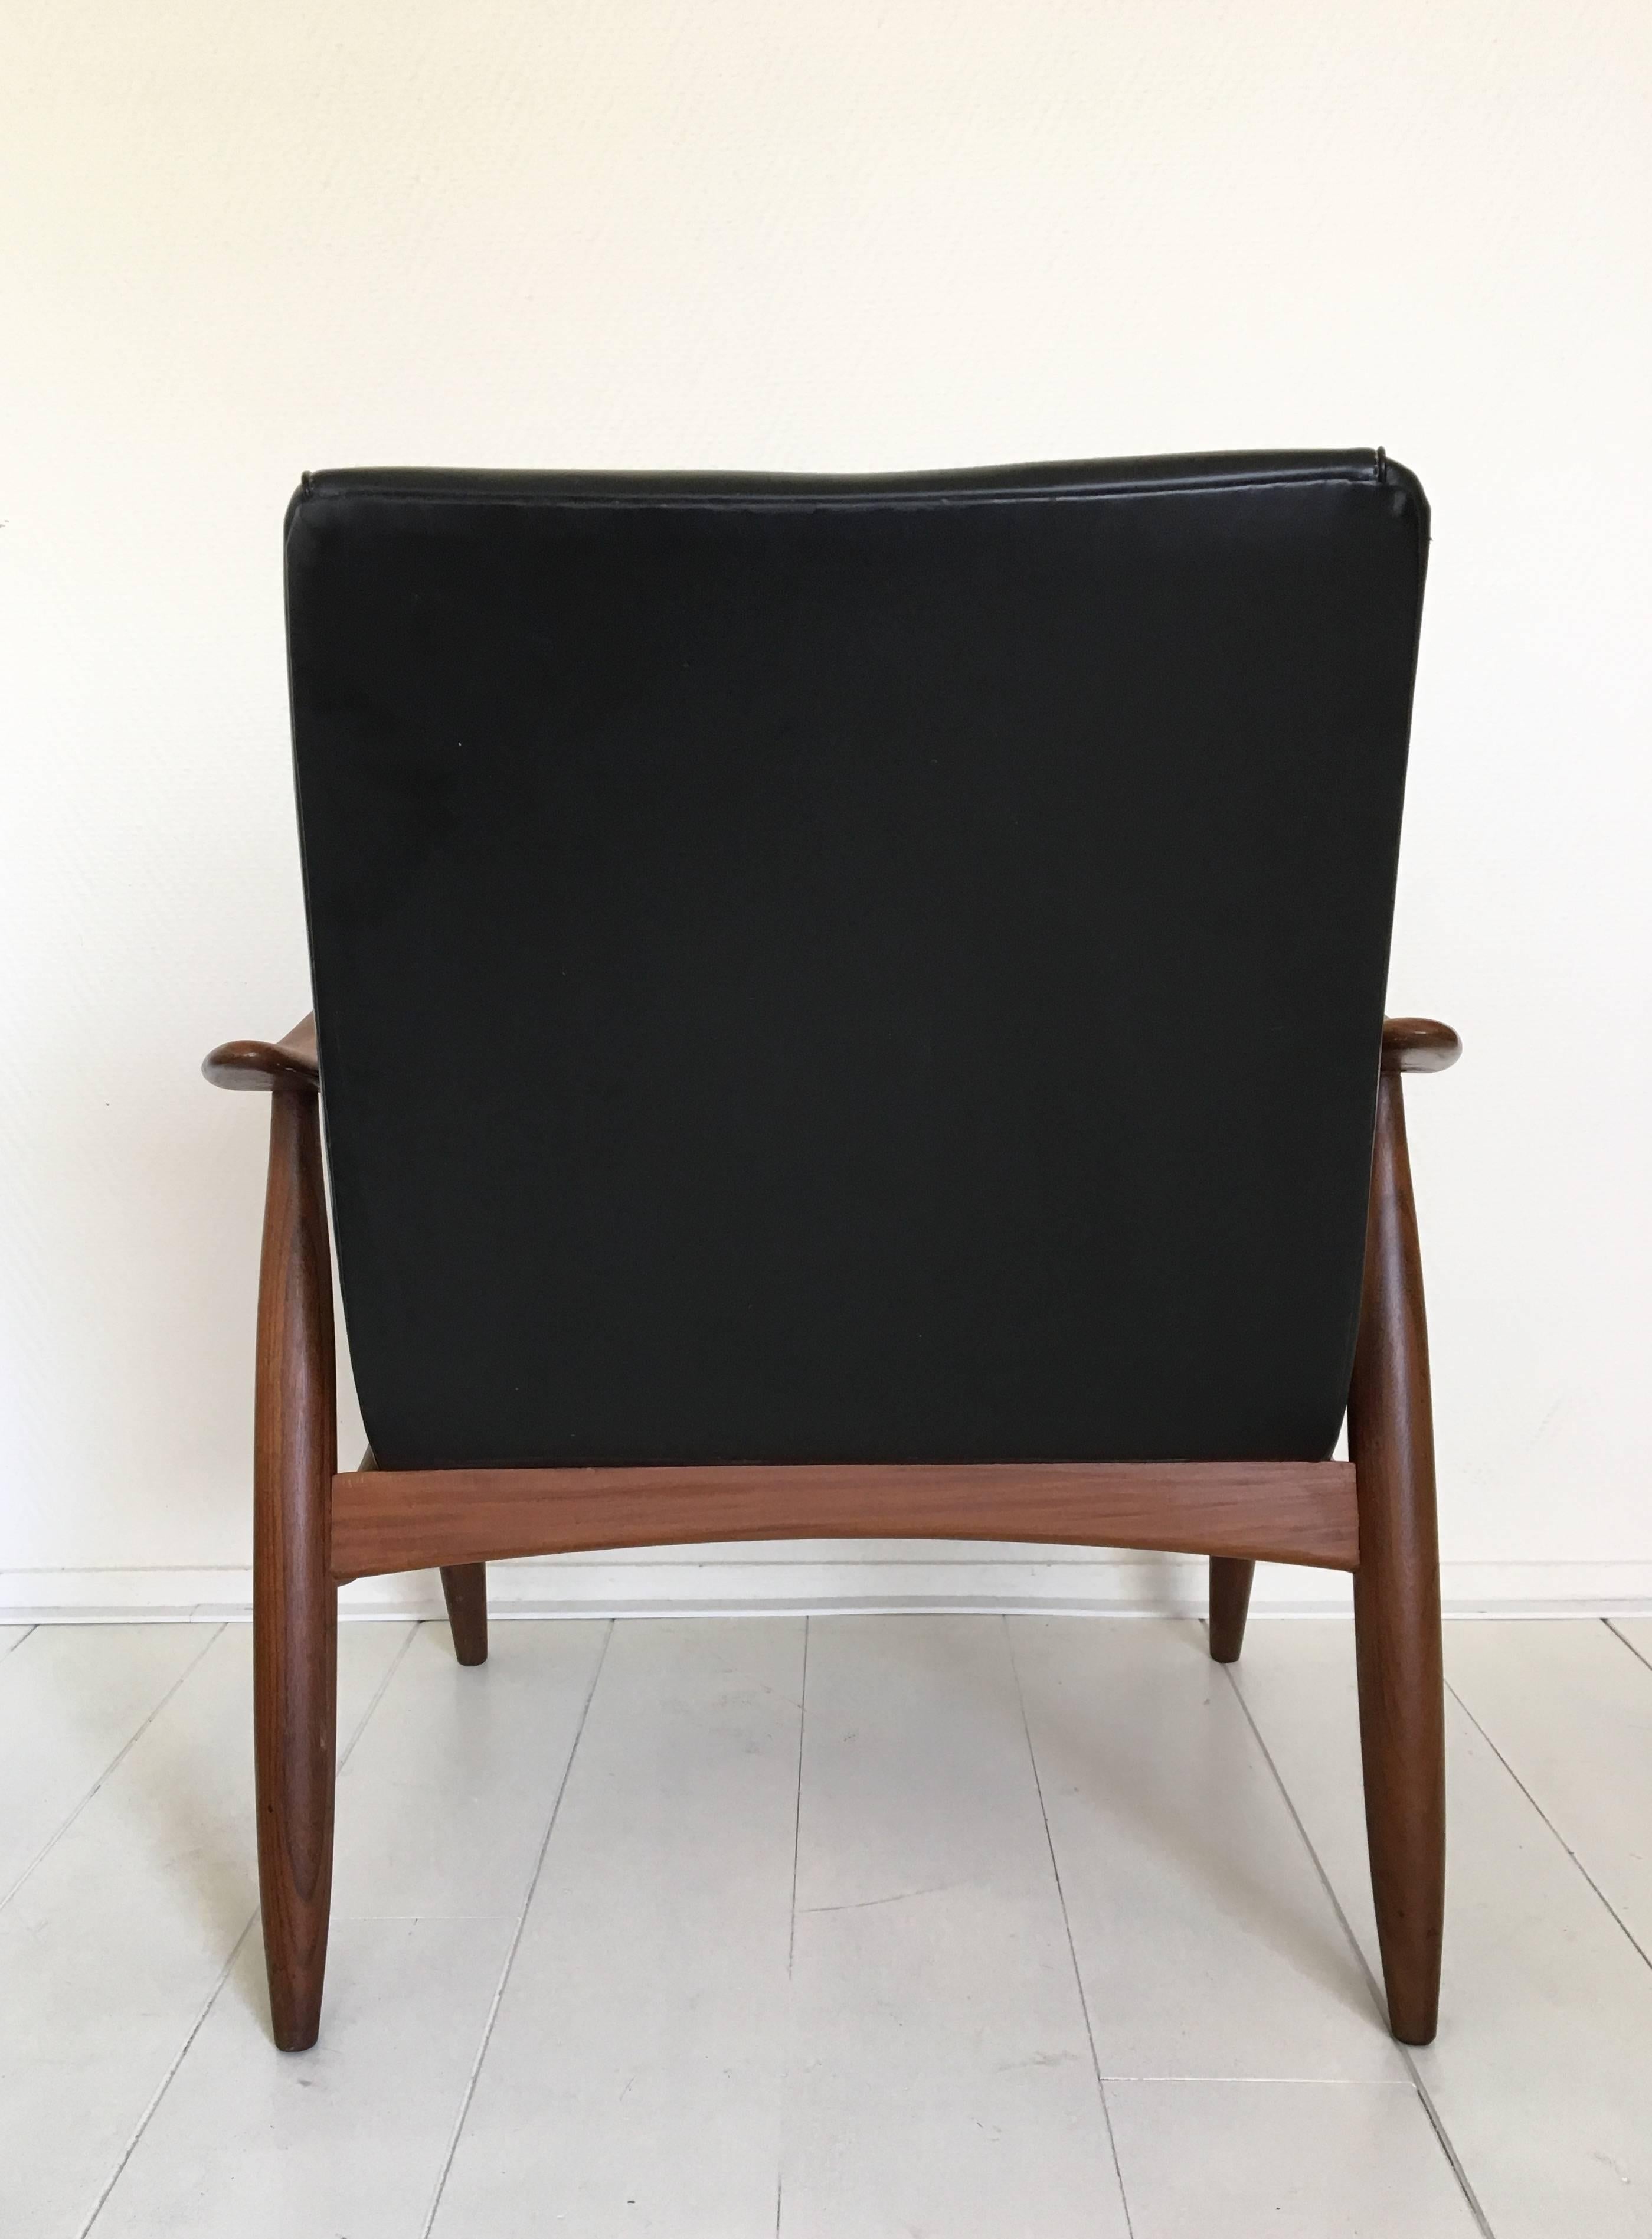 20th Century Mid-Century Modern Lounge Chair by Louis Van Teeffelen for Wébé, 1960s